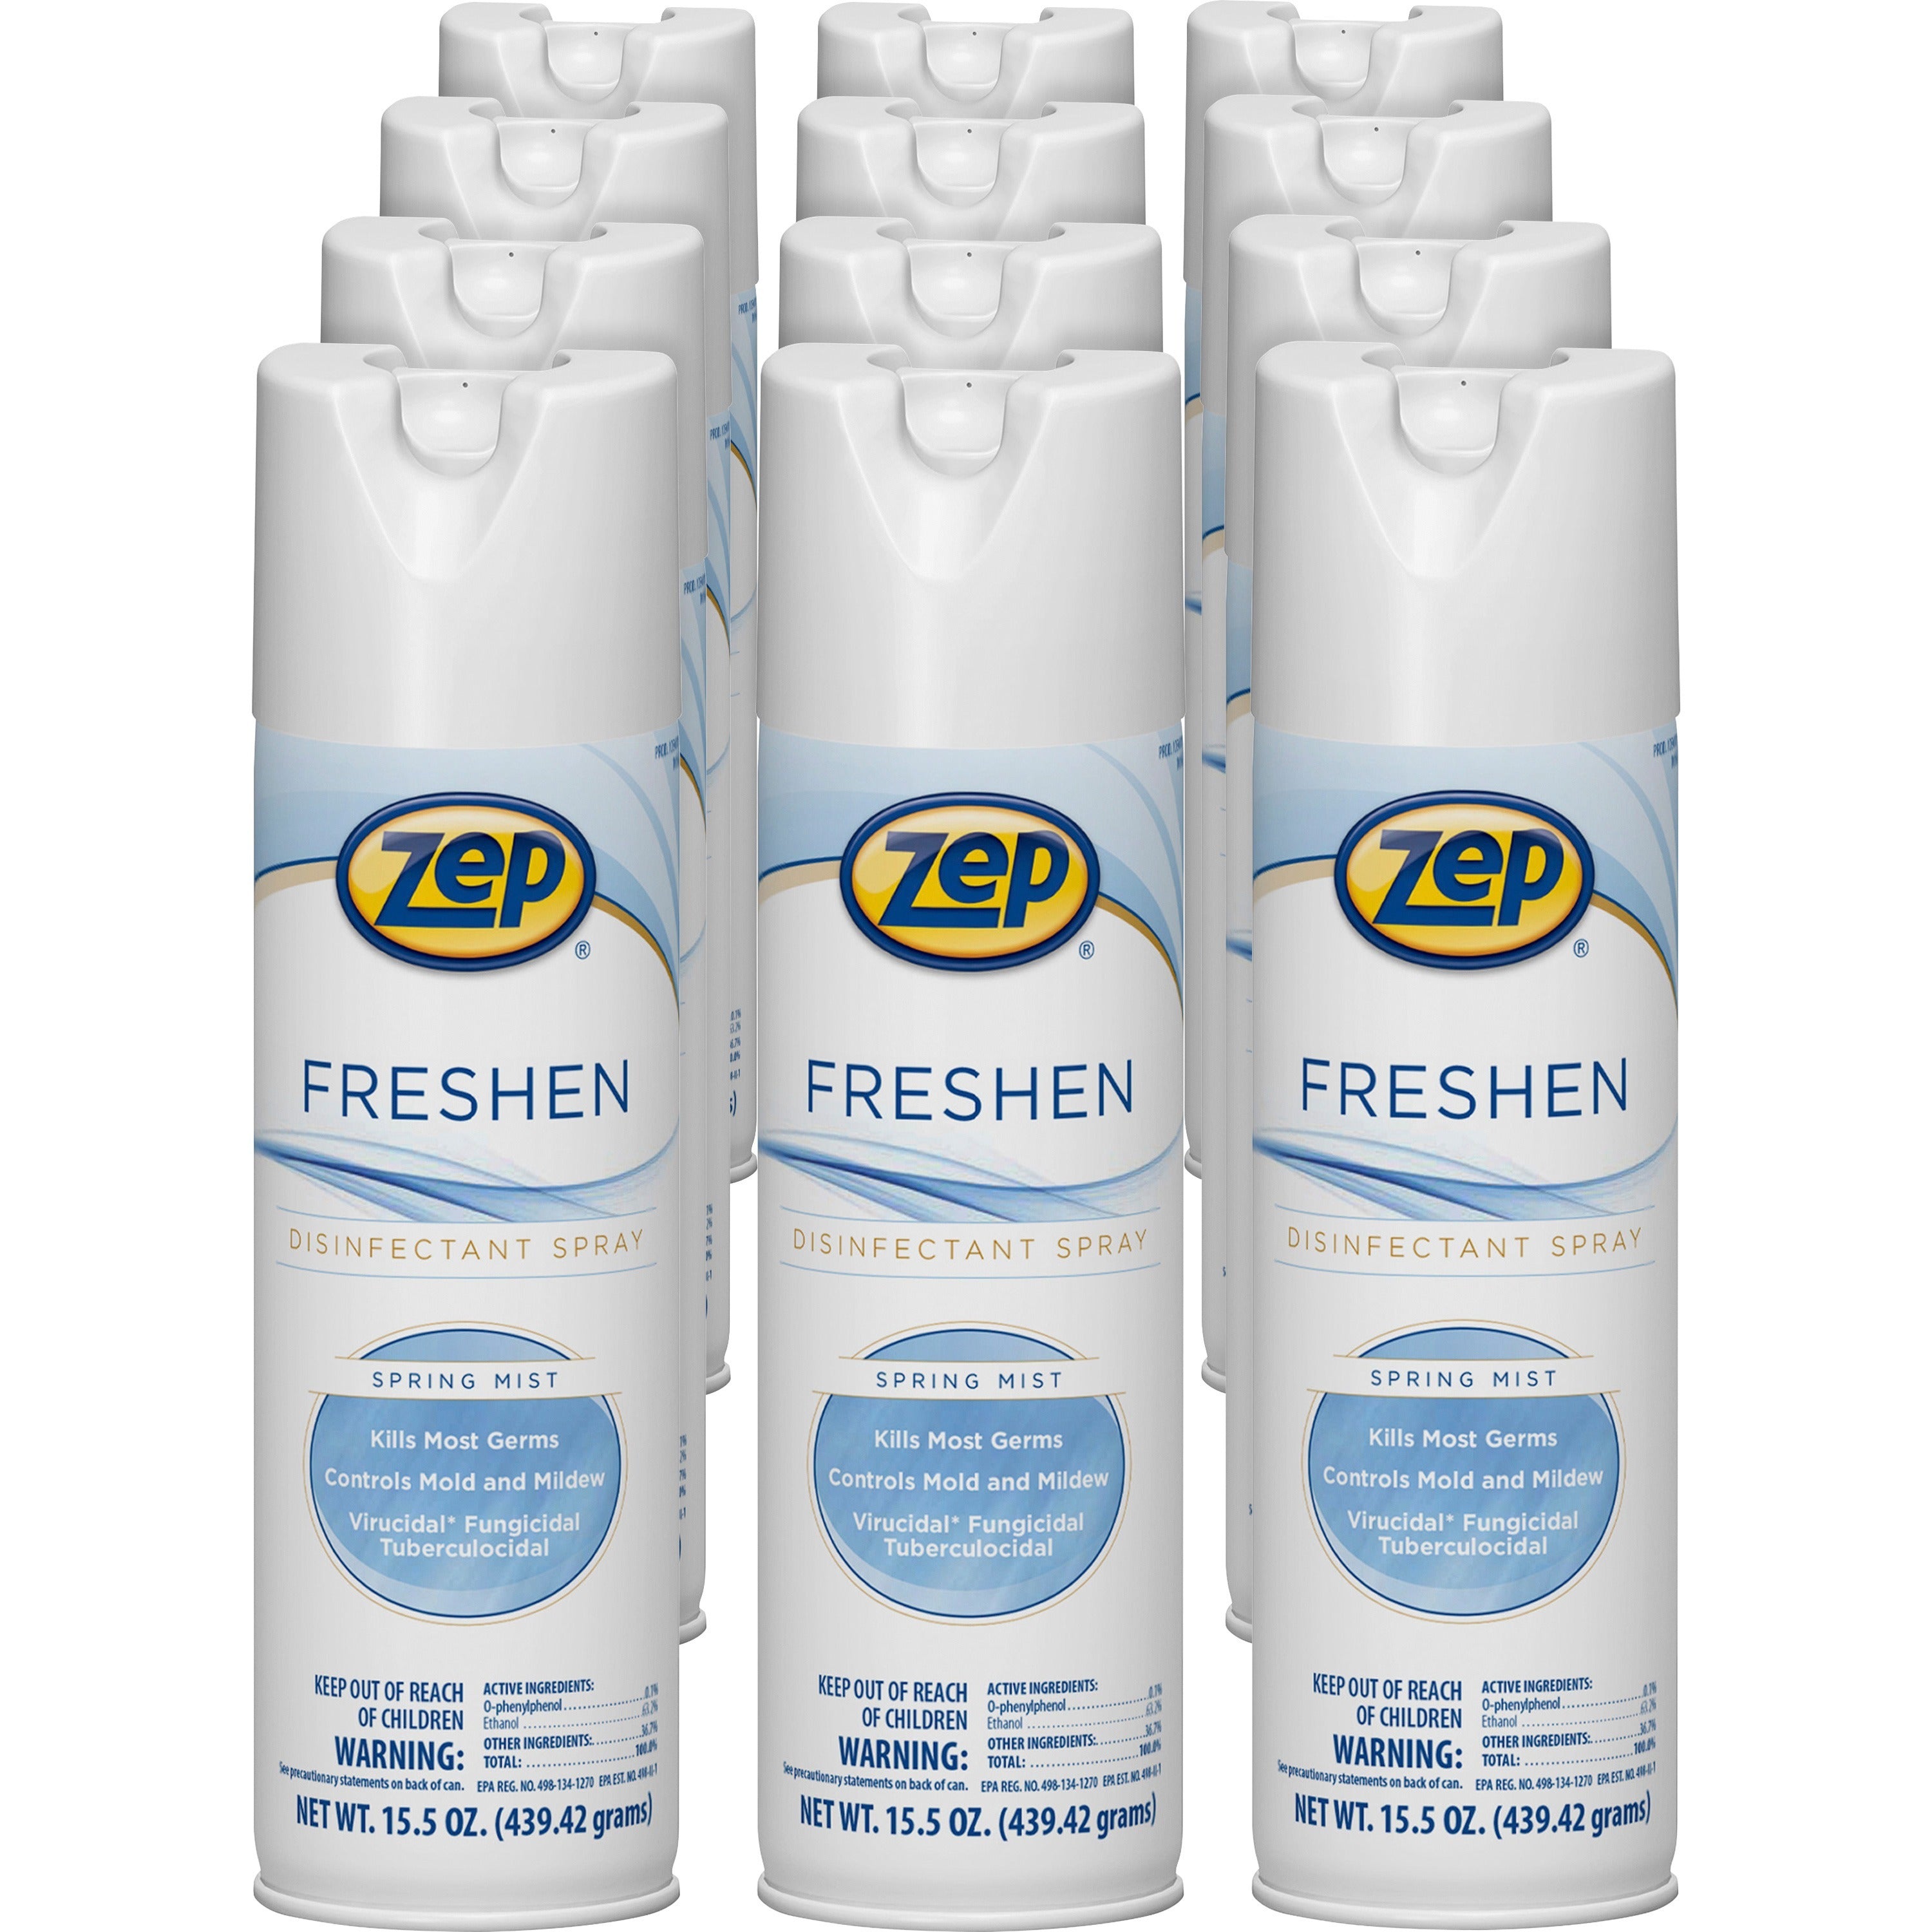 zep-freshen-disinfectant-spray-155-fl-oz-05-quart-spring-mist-scent-12-carton-non-porous-virucidal-tuberculocide-fungicide-clear_zpe1050017 - 1